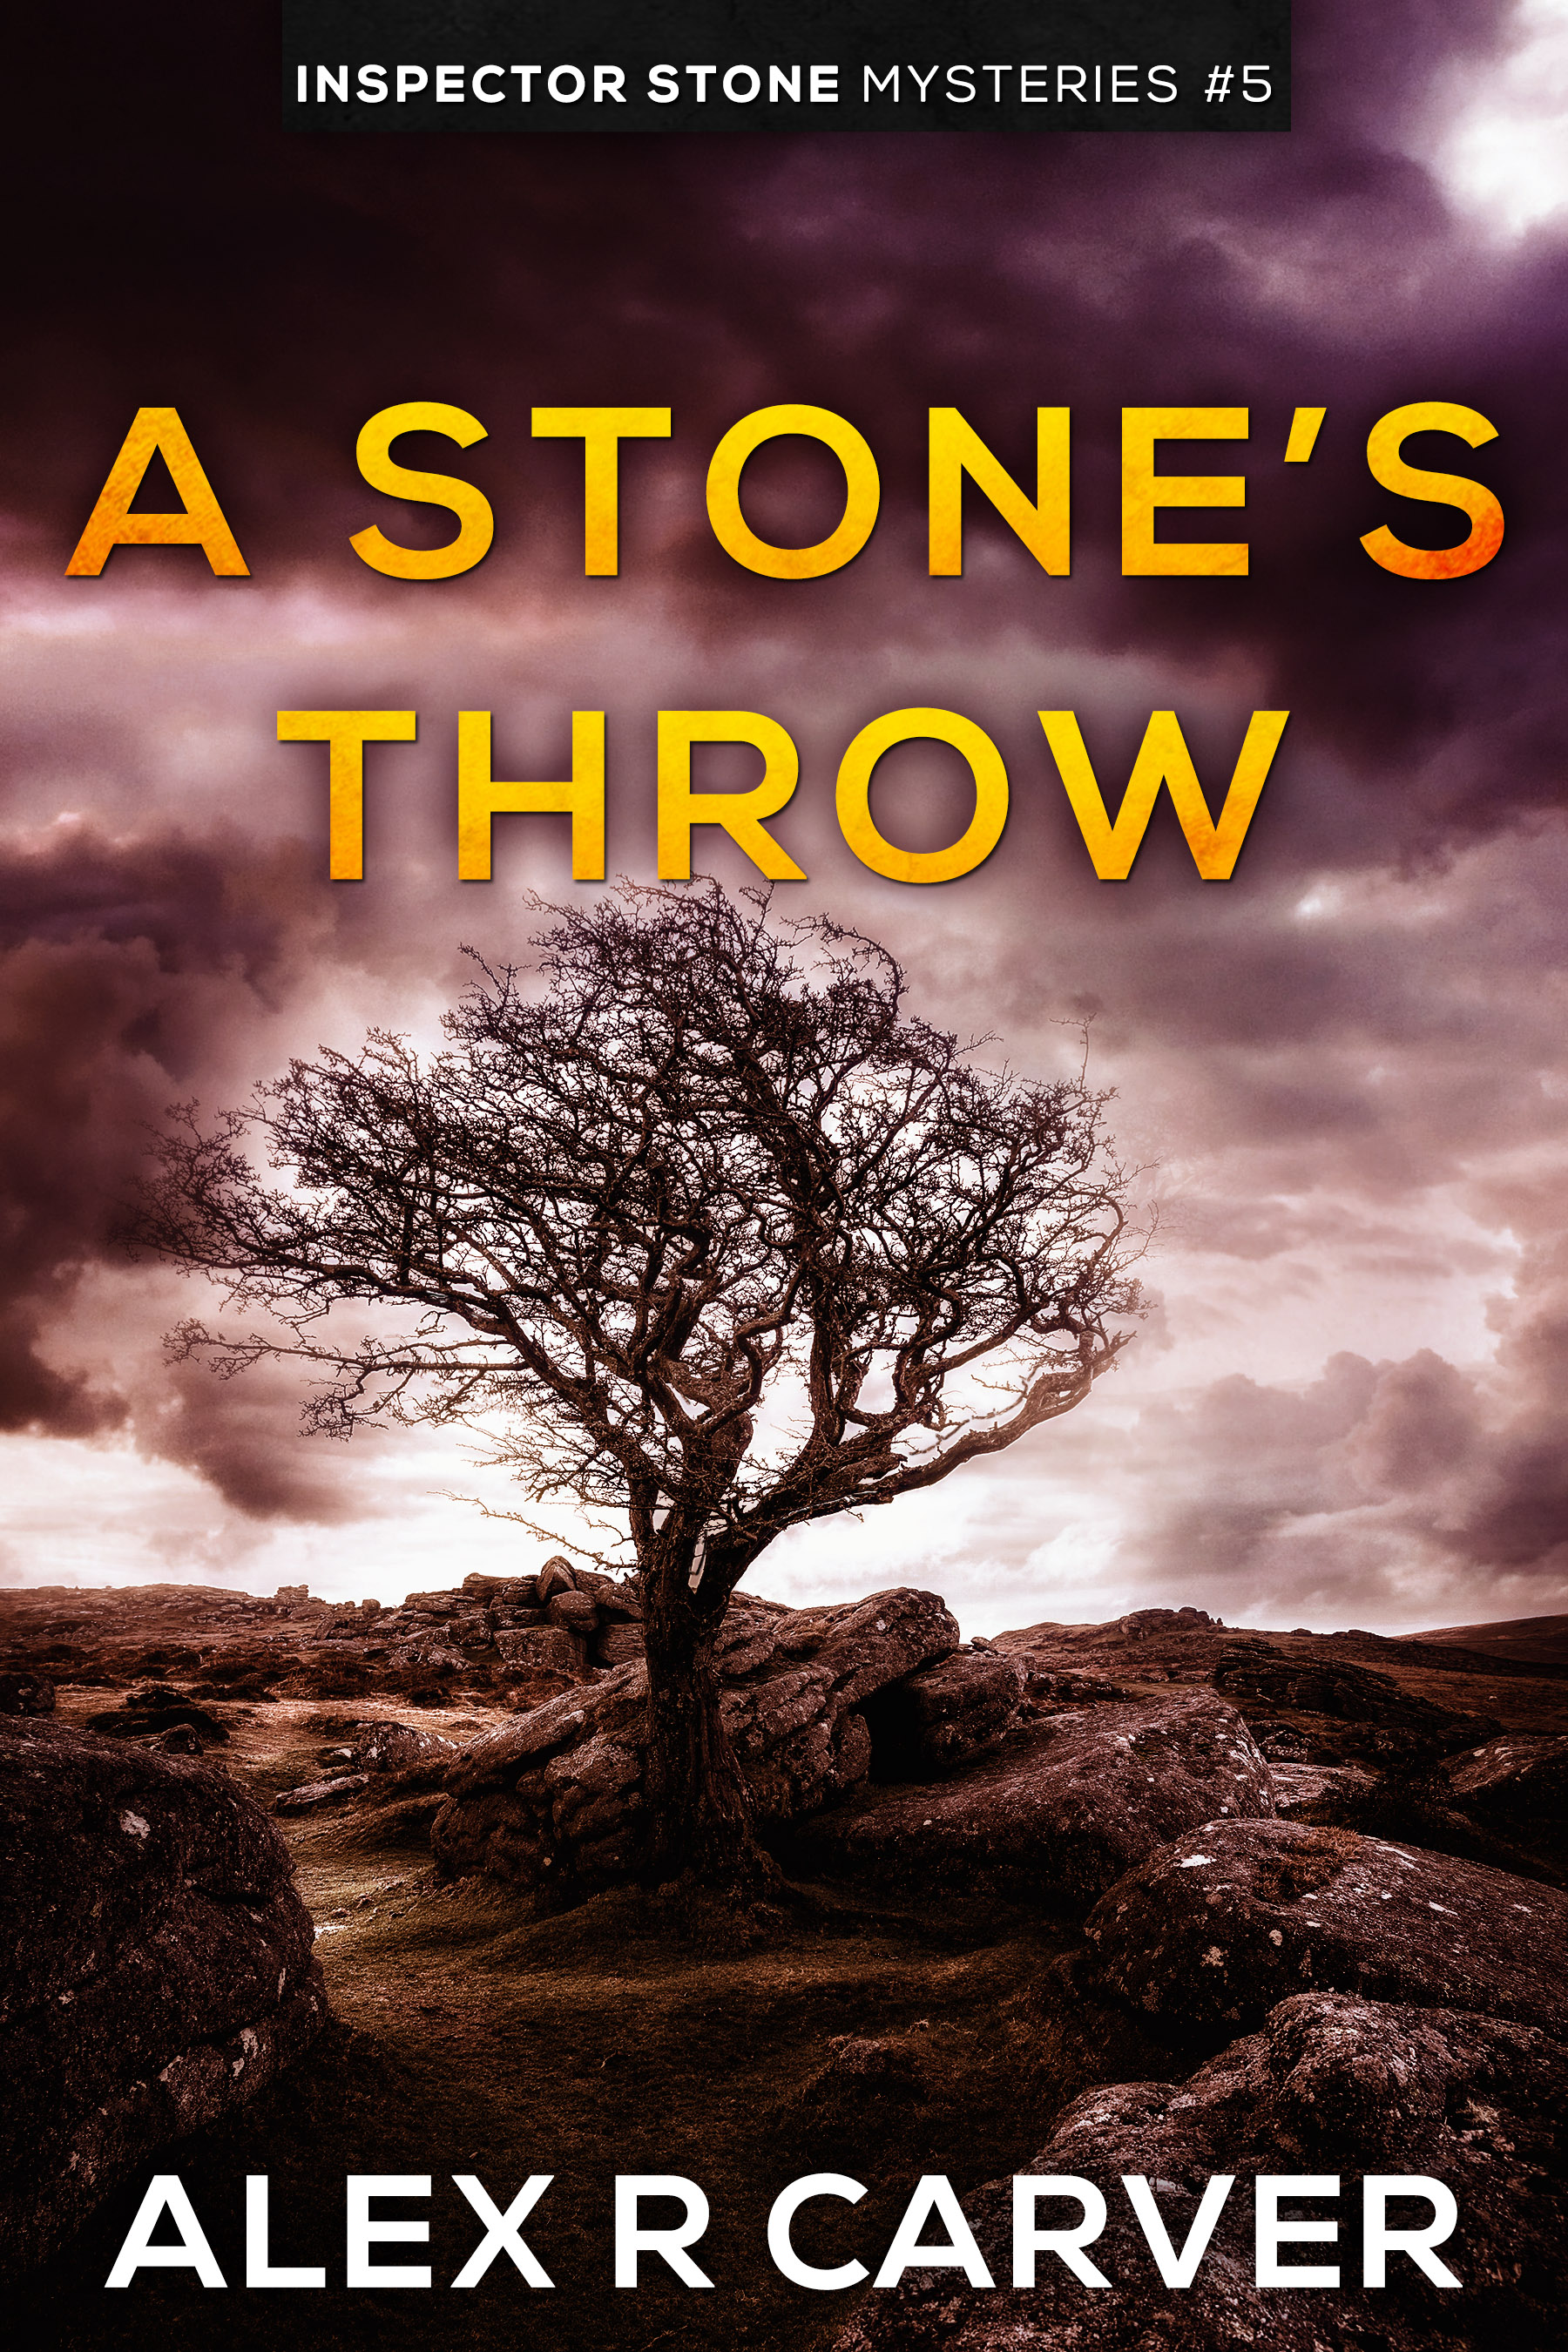 A Stone"s Throw